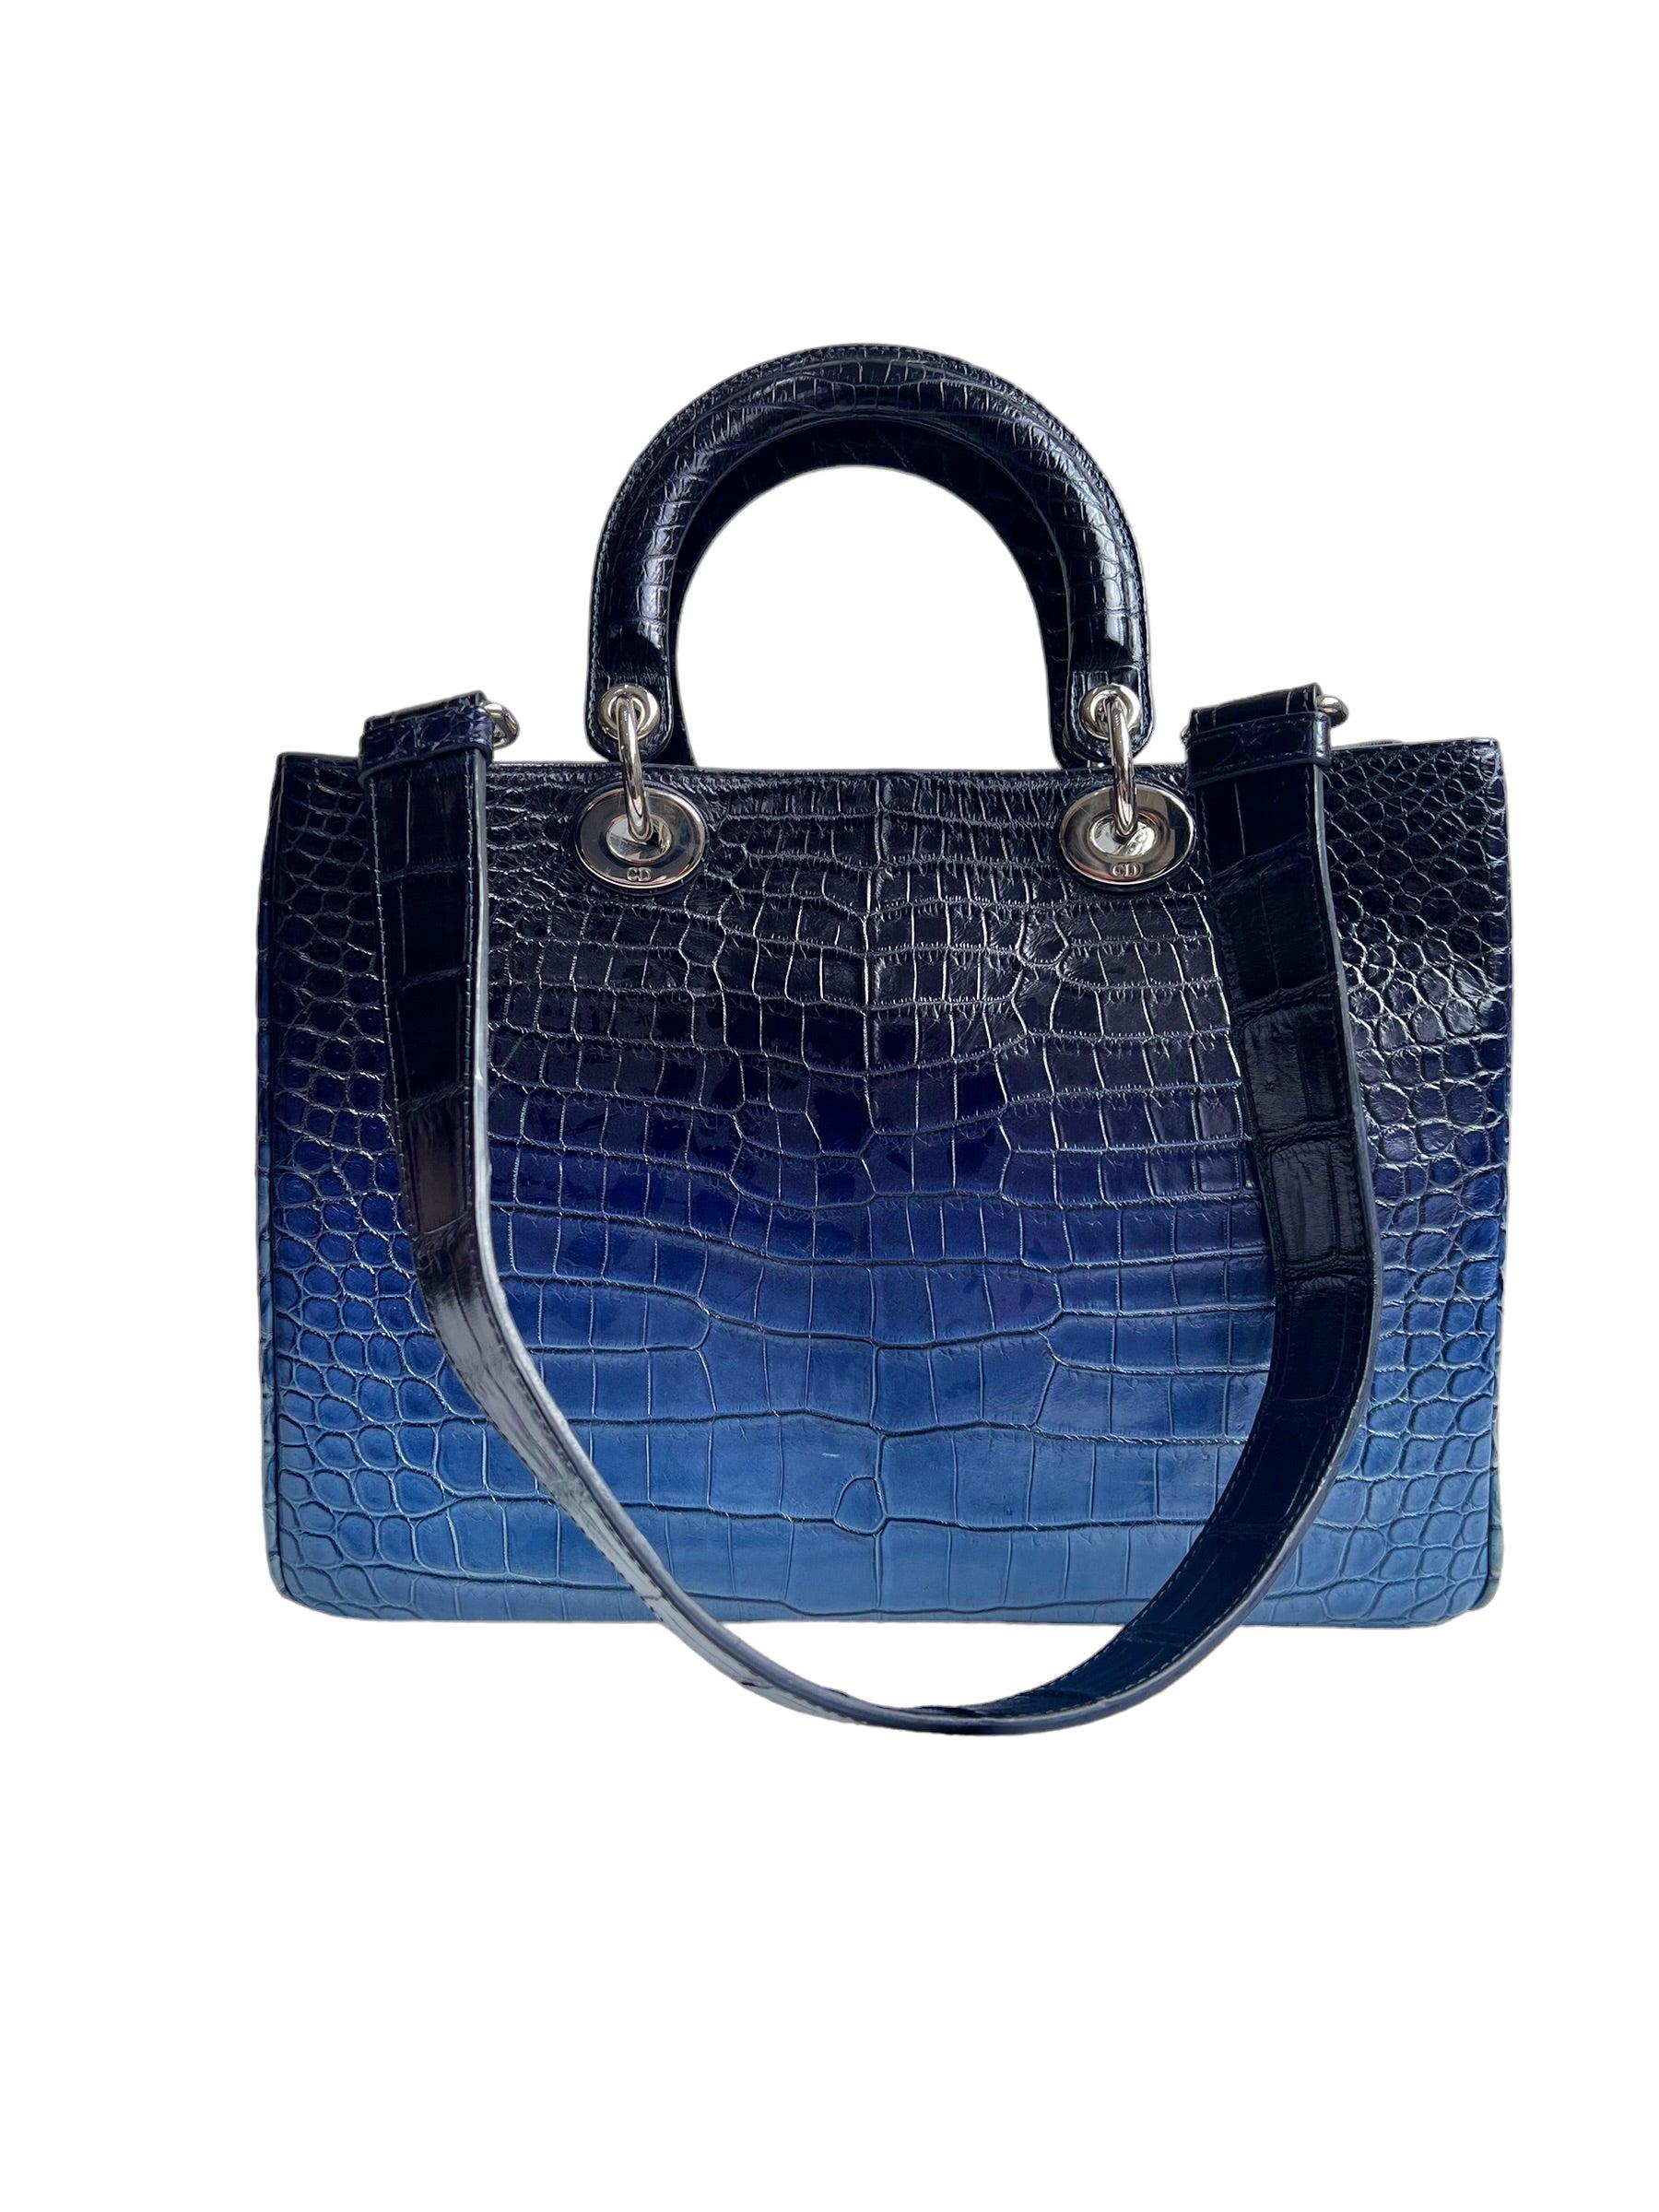 Violet Christian Dior Diorissimo Ombre Crocodile Tote Medium Bag en vente